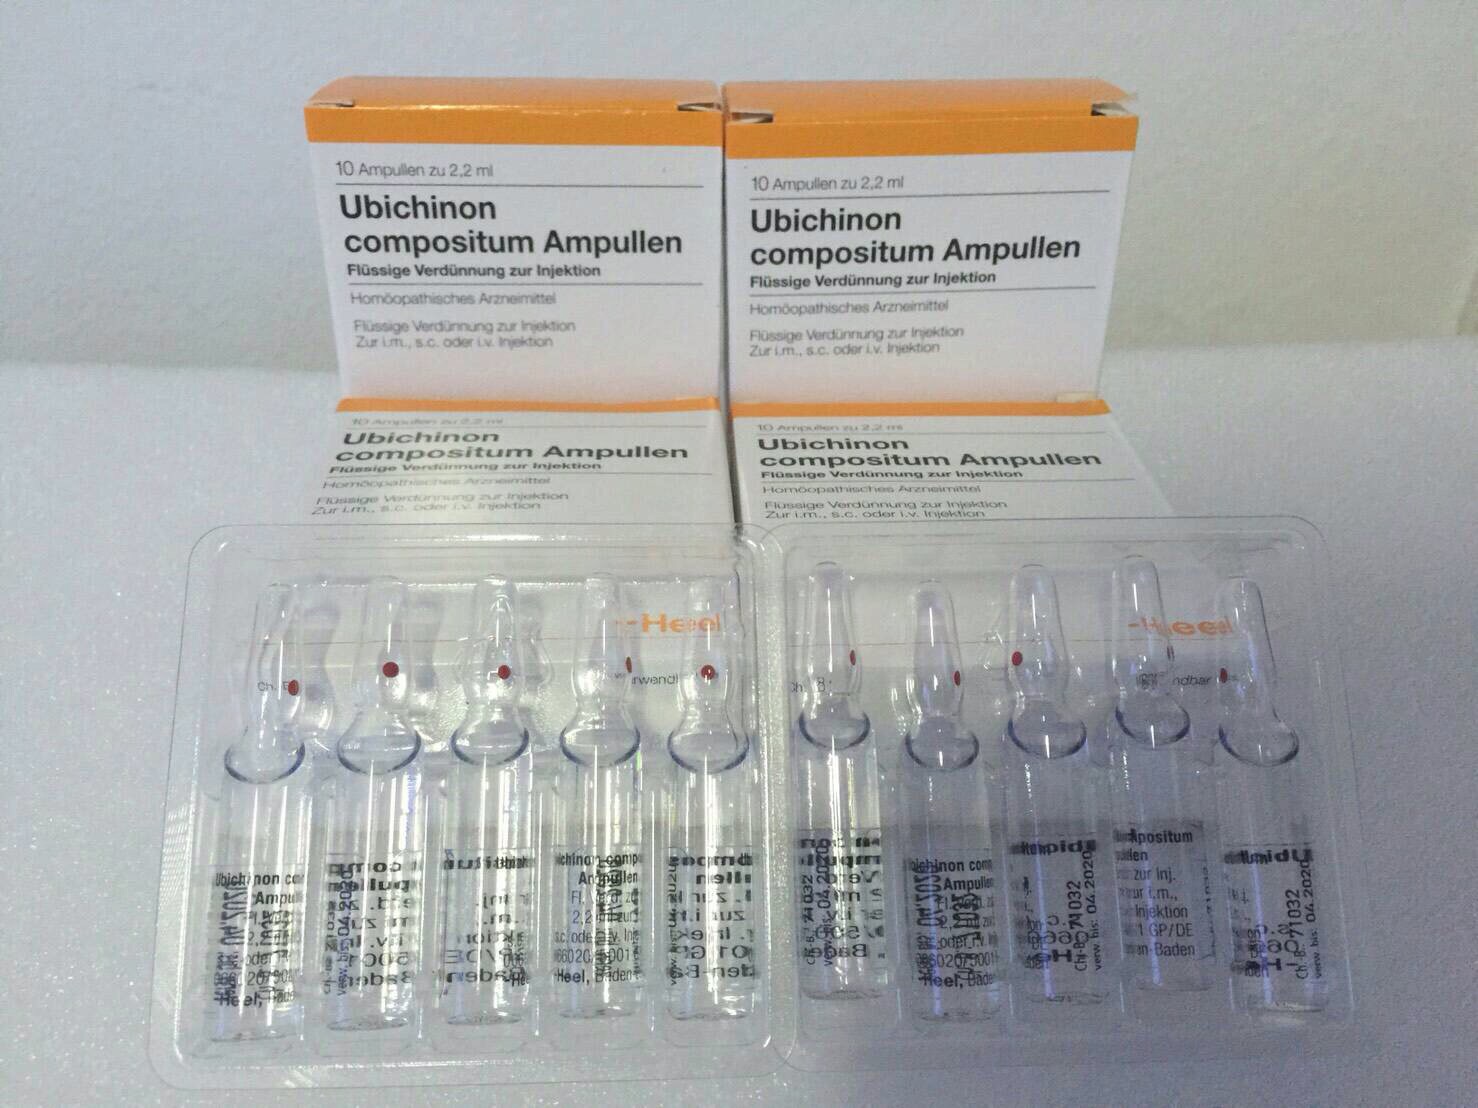 UBICHINON COMPOSITUM AMPULLEN HEEL (10 amp x 2.2 ml/ box)